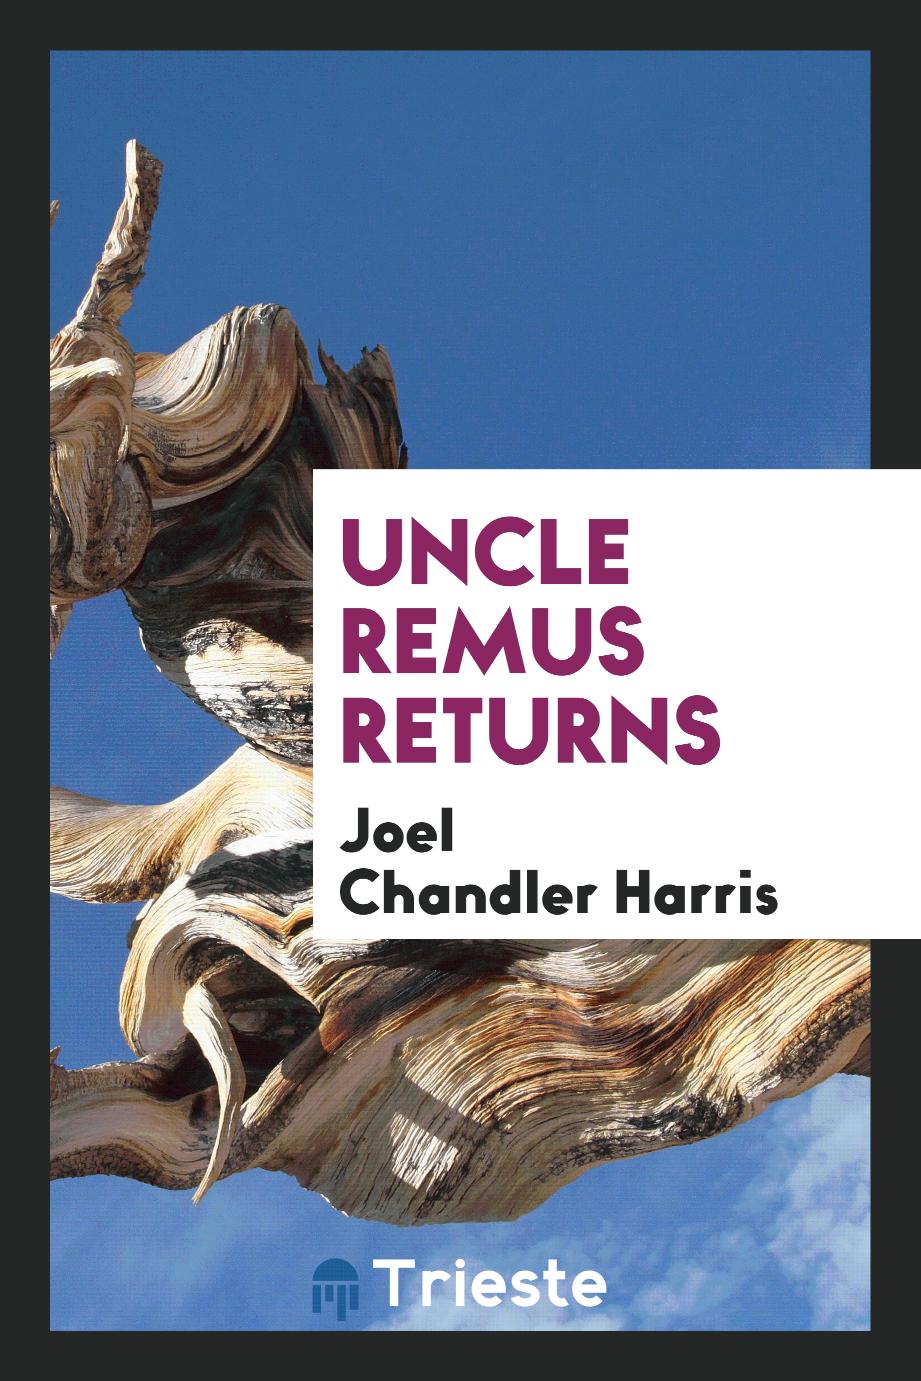 Uncle Remus returns